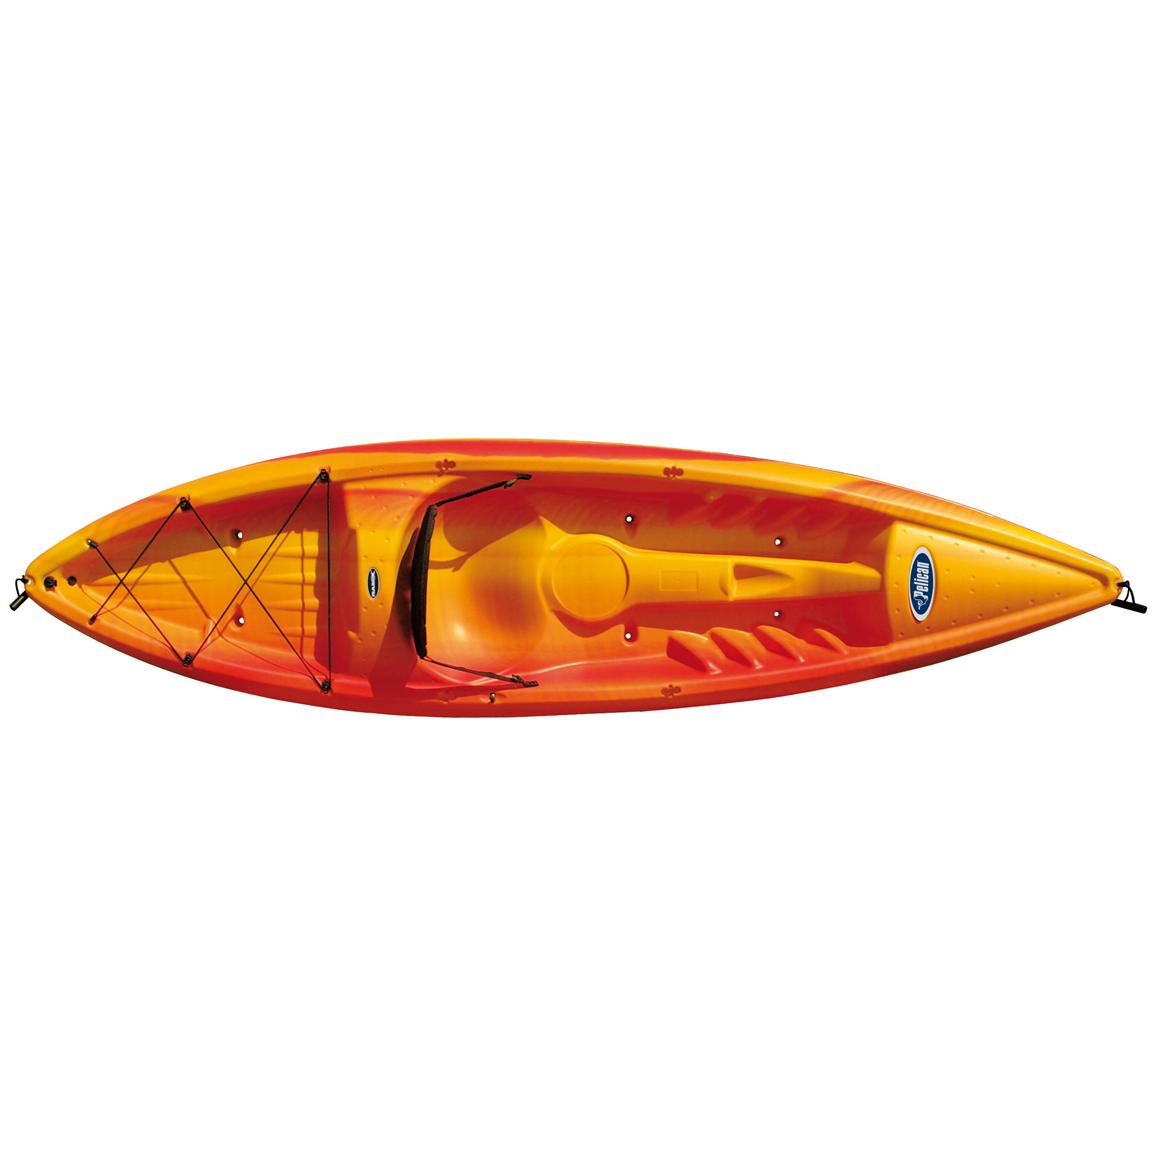 Pelican™ Apex 100 Kayak, Yellow / Green - 183754, Canoes & Kayaks at Sportsman's Guide1155 x 1155